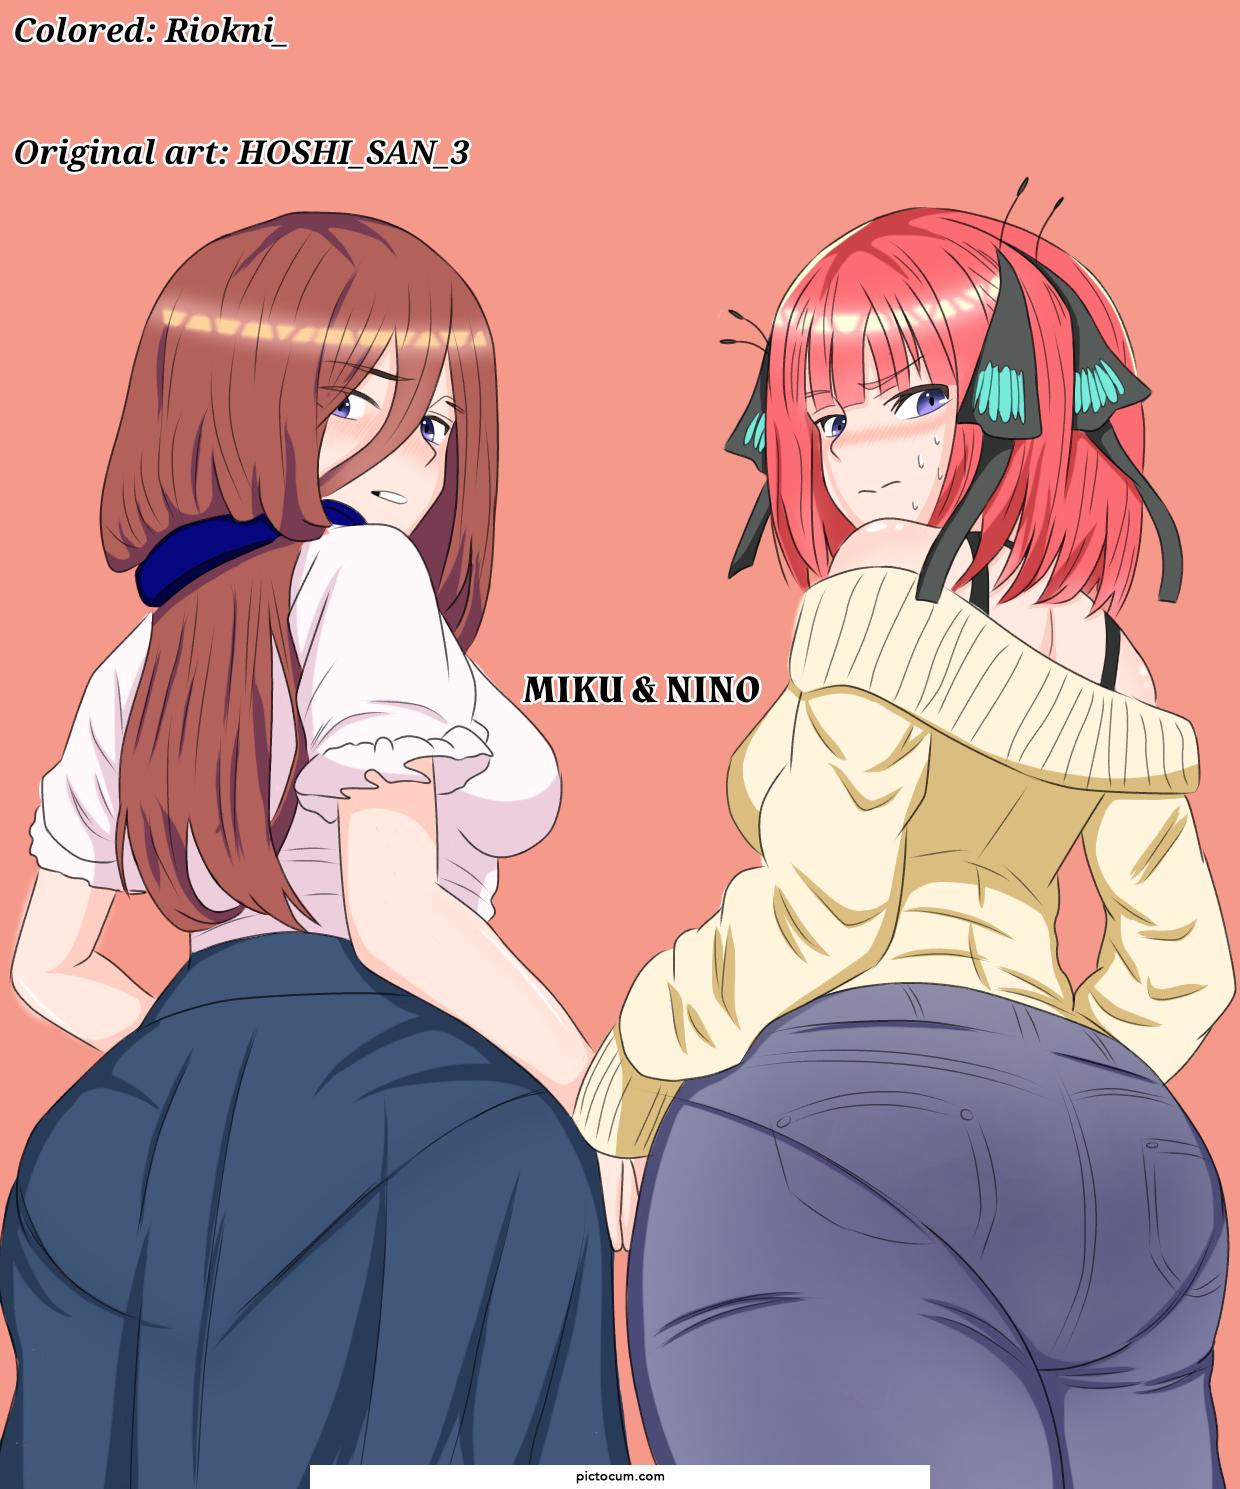 Miku and Nino comparing their buns